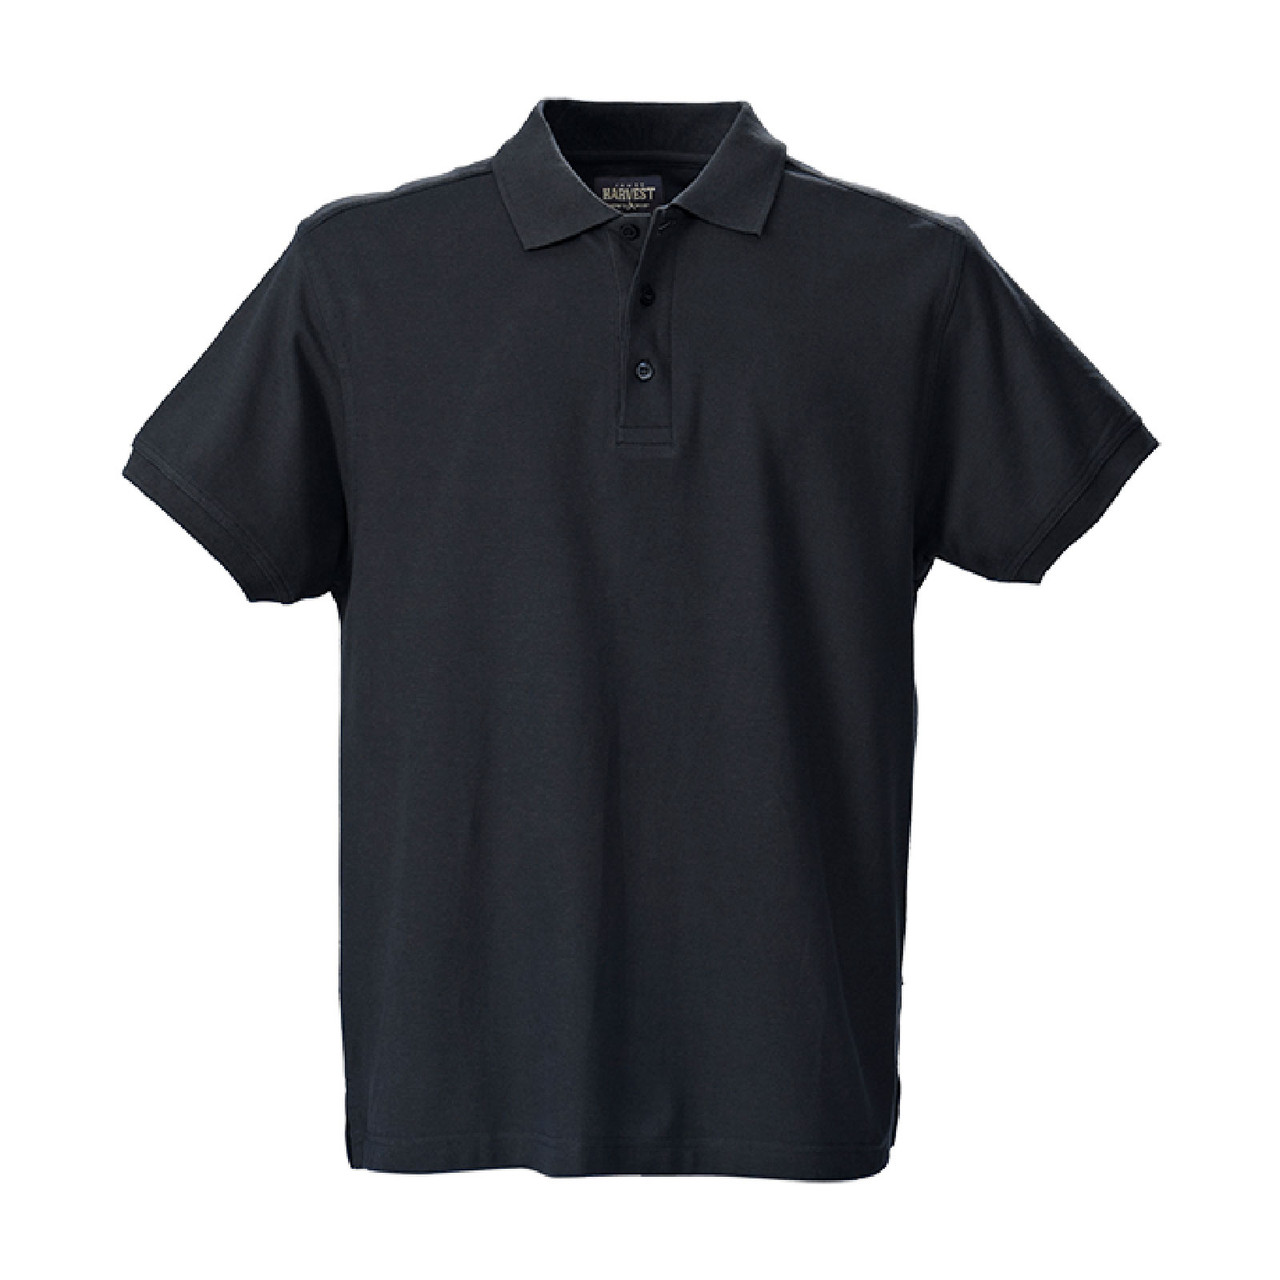 Mens Cotton Pique Polo Shirts | Modern Fit Polos | Bulk Buy Plain Clothing